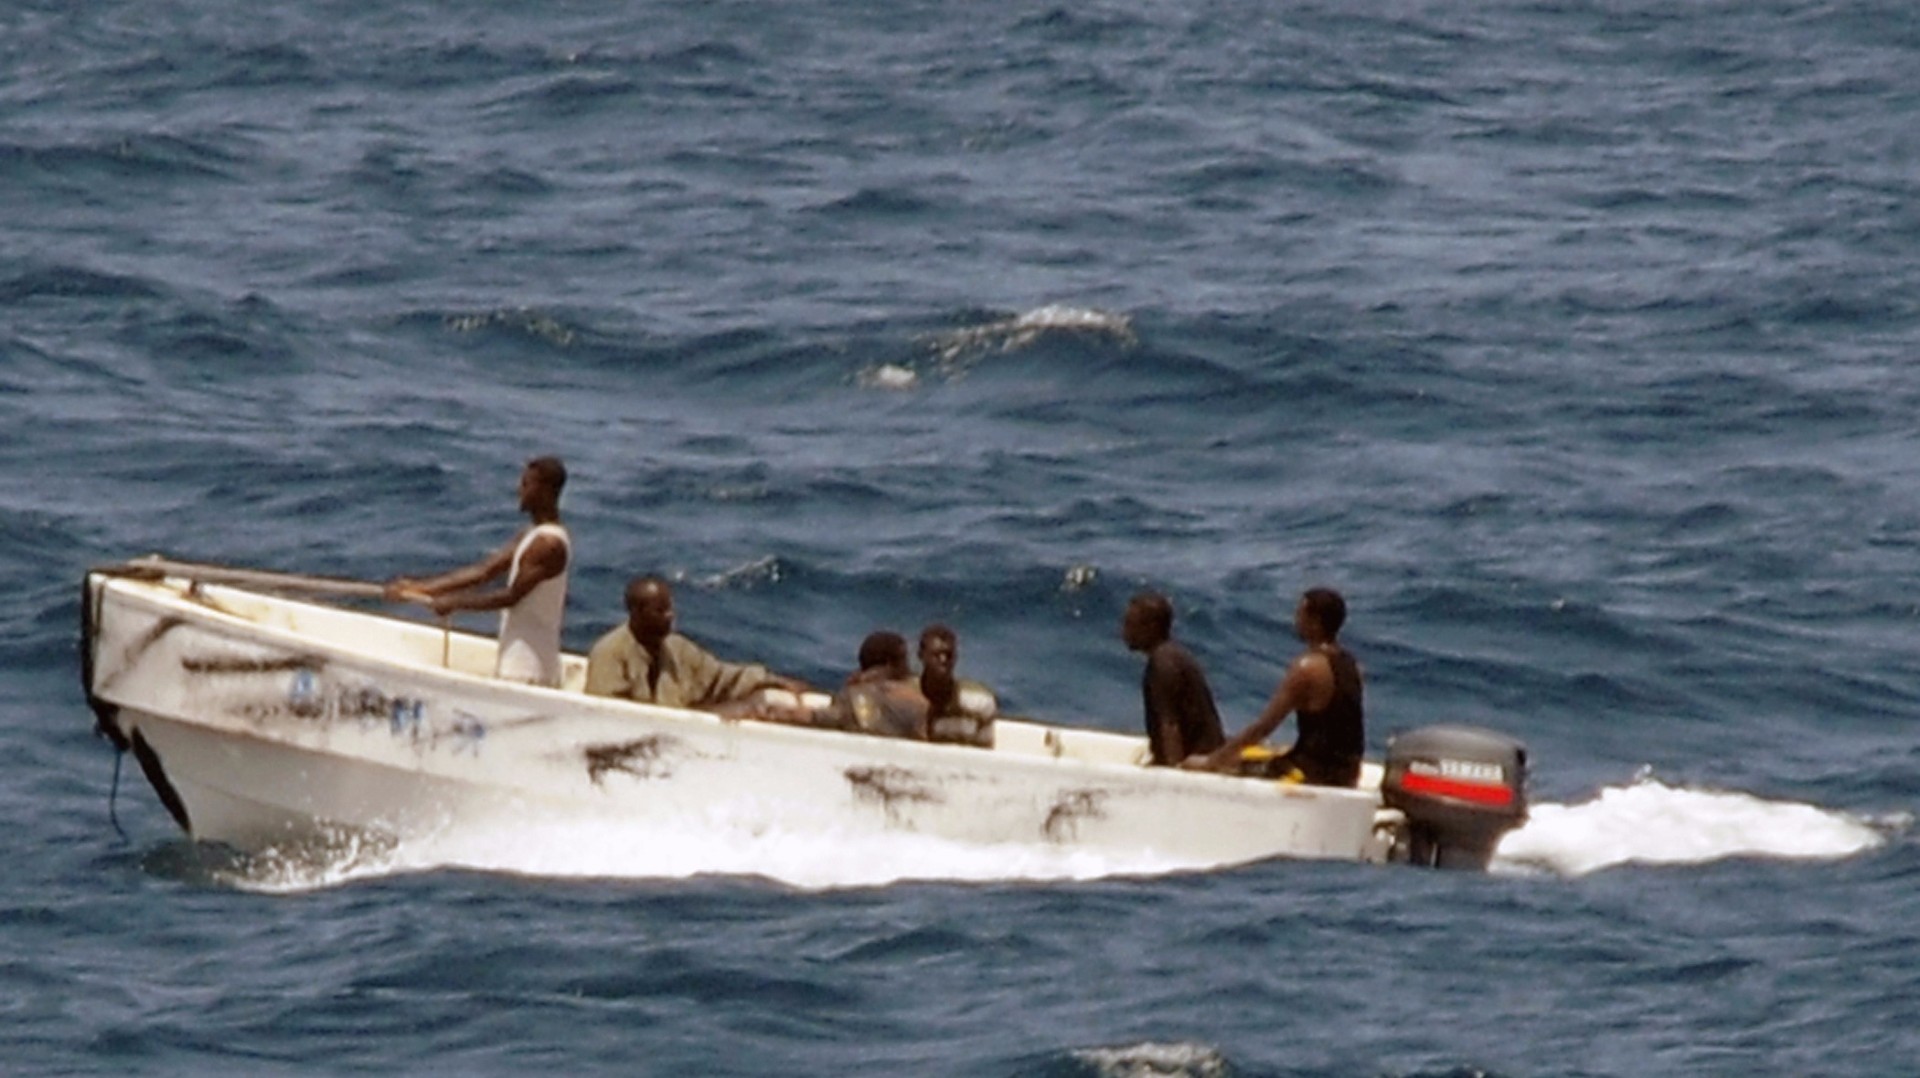 pirates-hijack-freighter-off-somalia-s-coast-officials-say-9news